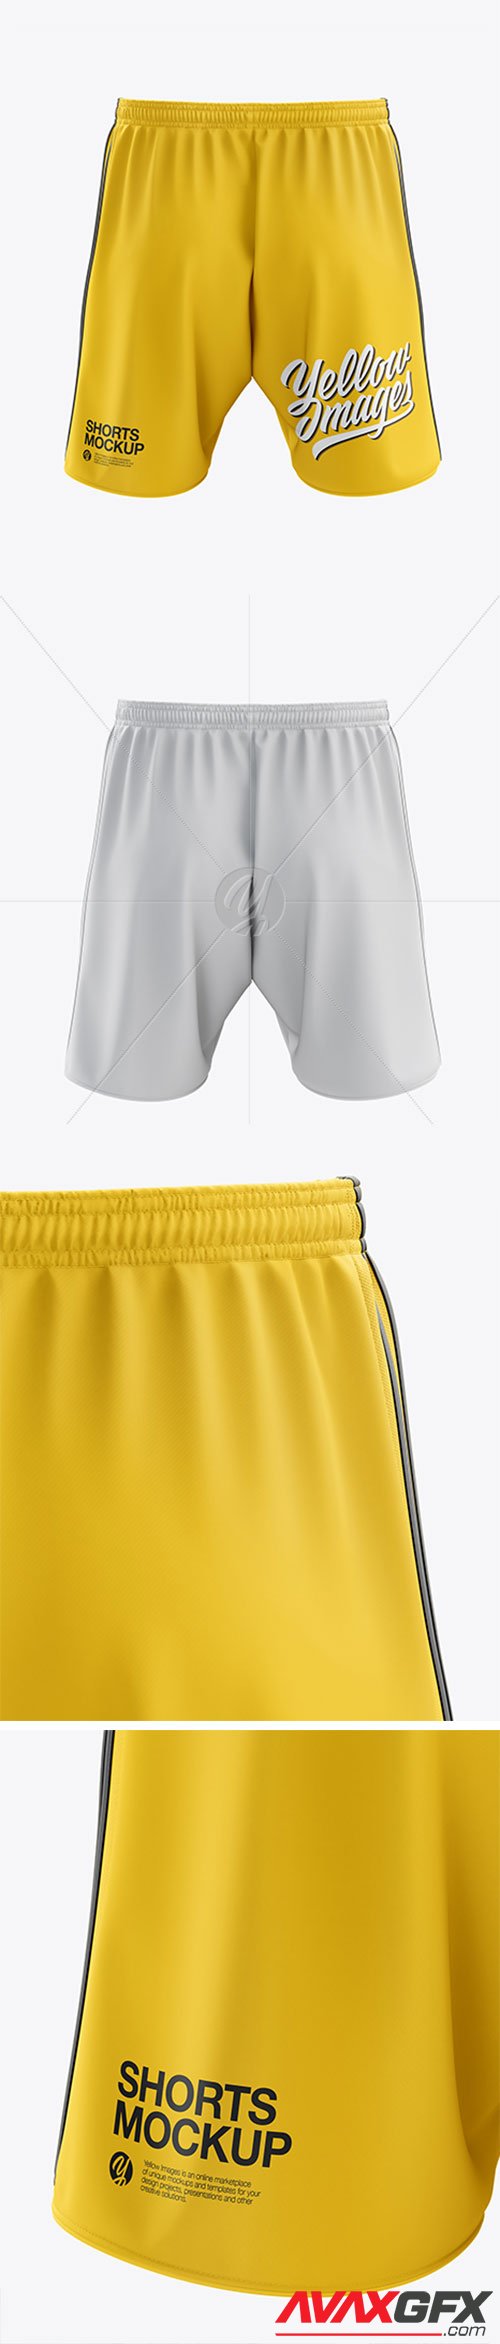 Download Men's Soccer Shorts mockup (Back View) 38707 » AVAXGFX ...